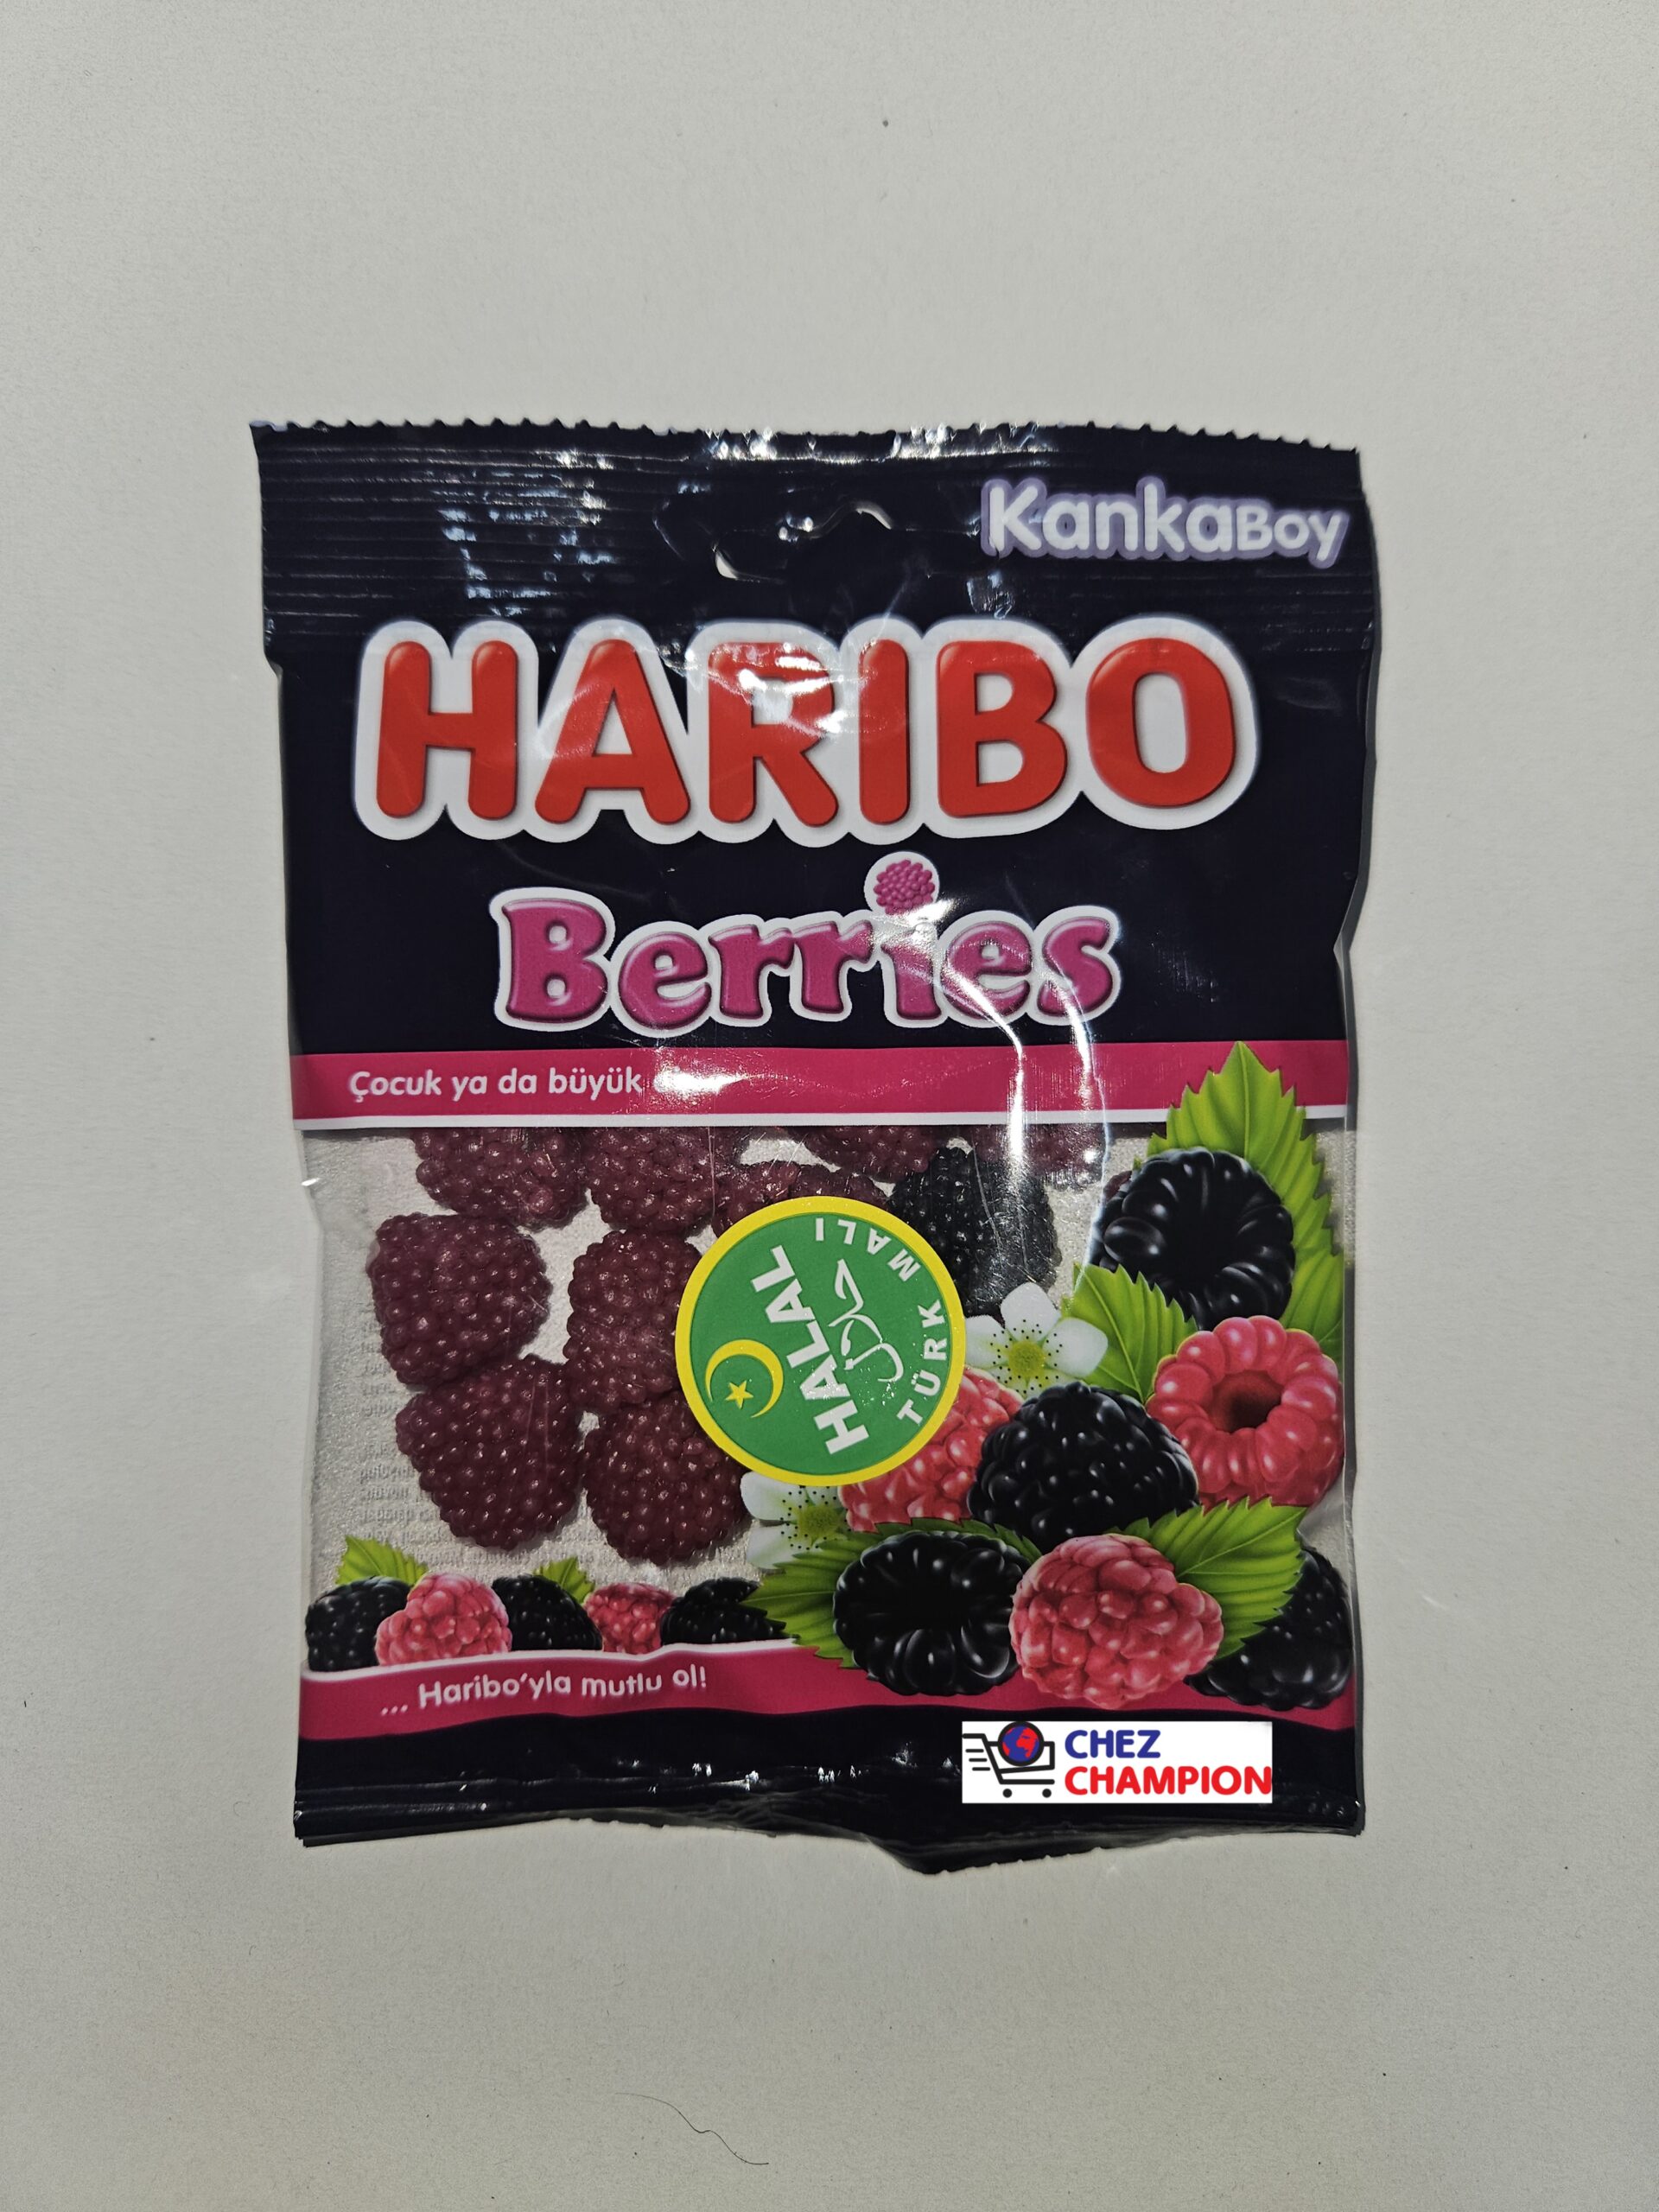 Haribo berries halal – bonbons baies- Beeren bonbons – 80g